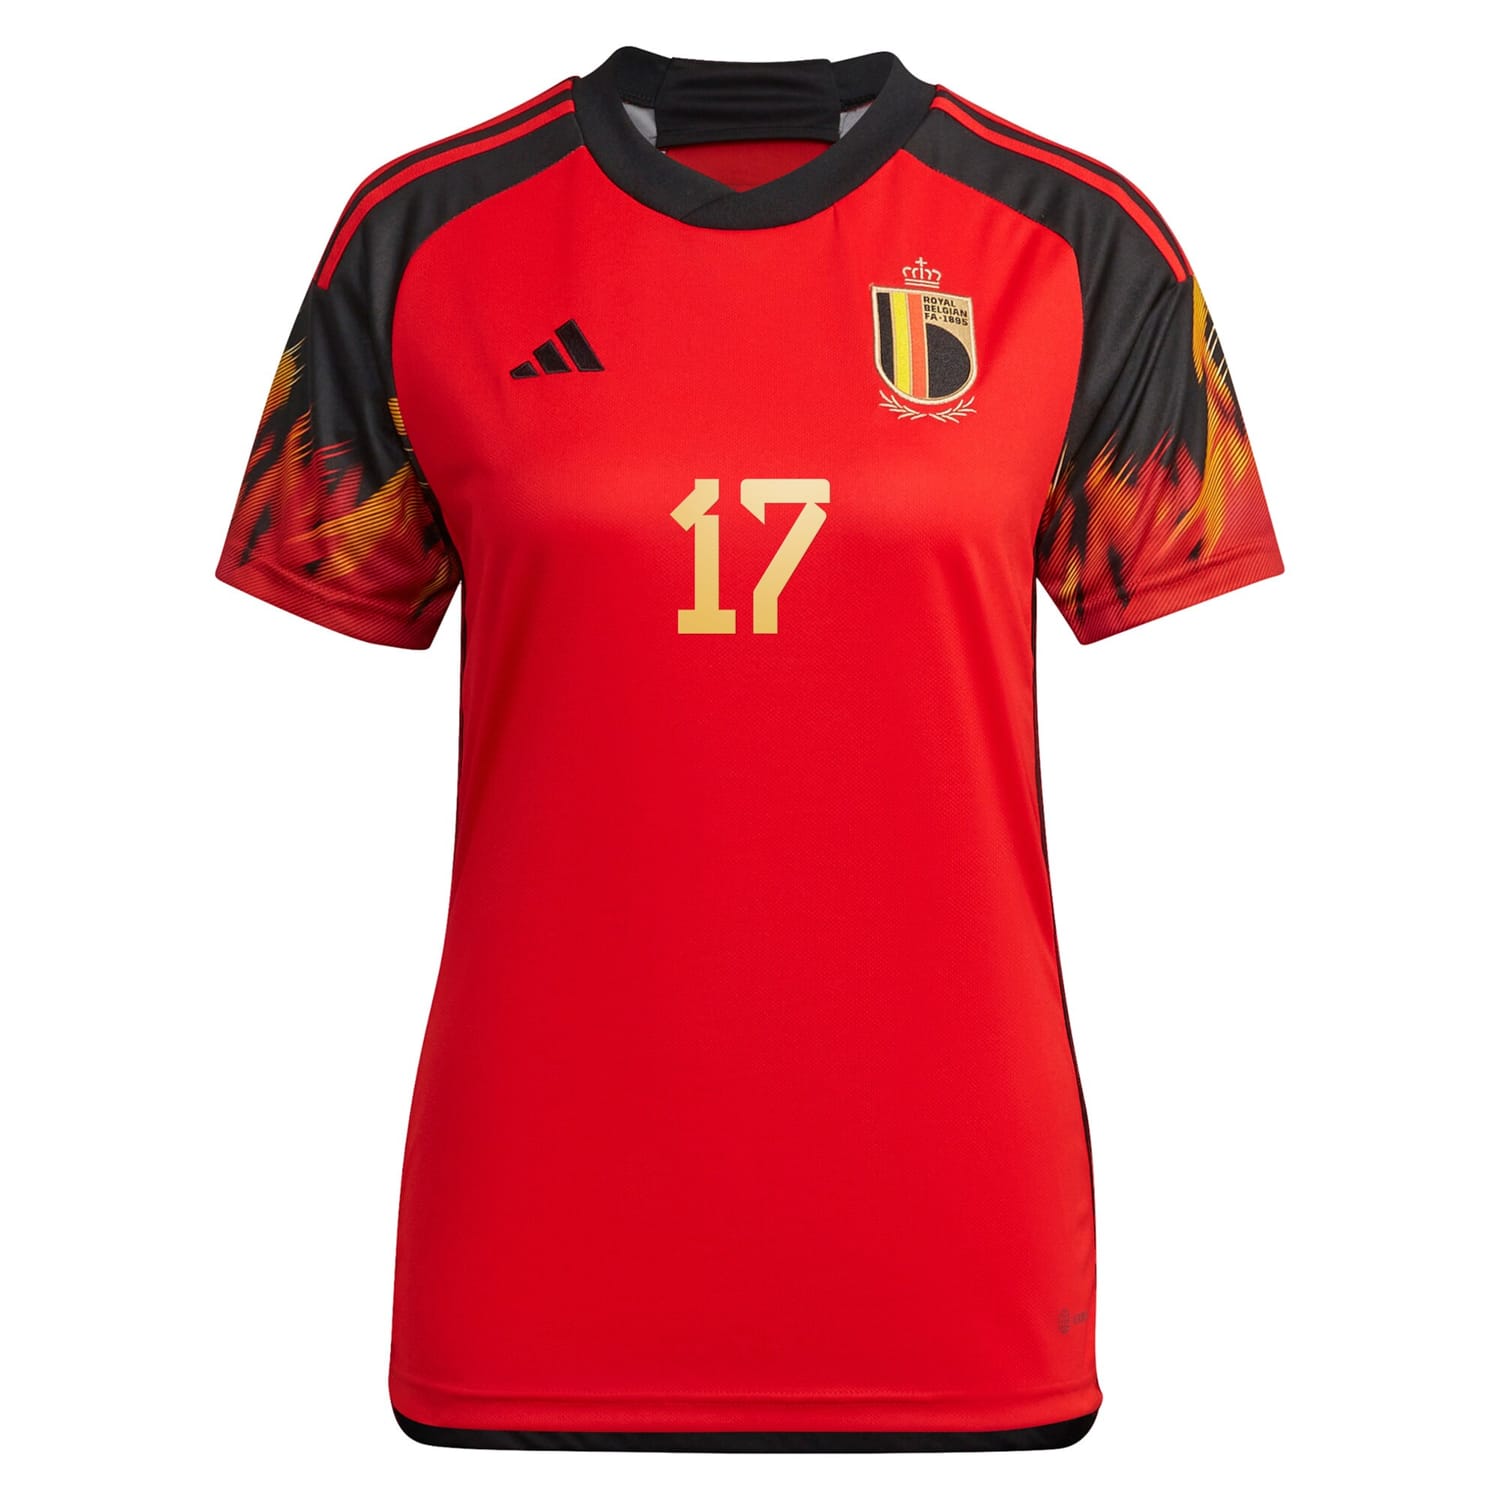 Belgium National Team Home Jersey Shirt 2022 player Leandro Trossard 17 printing for Women